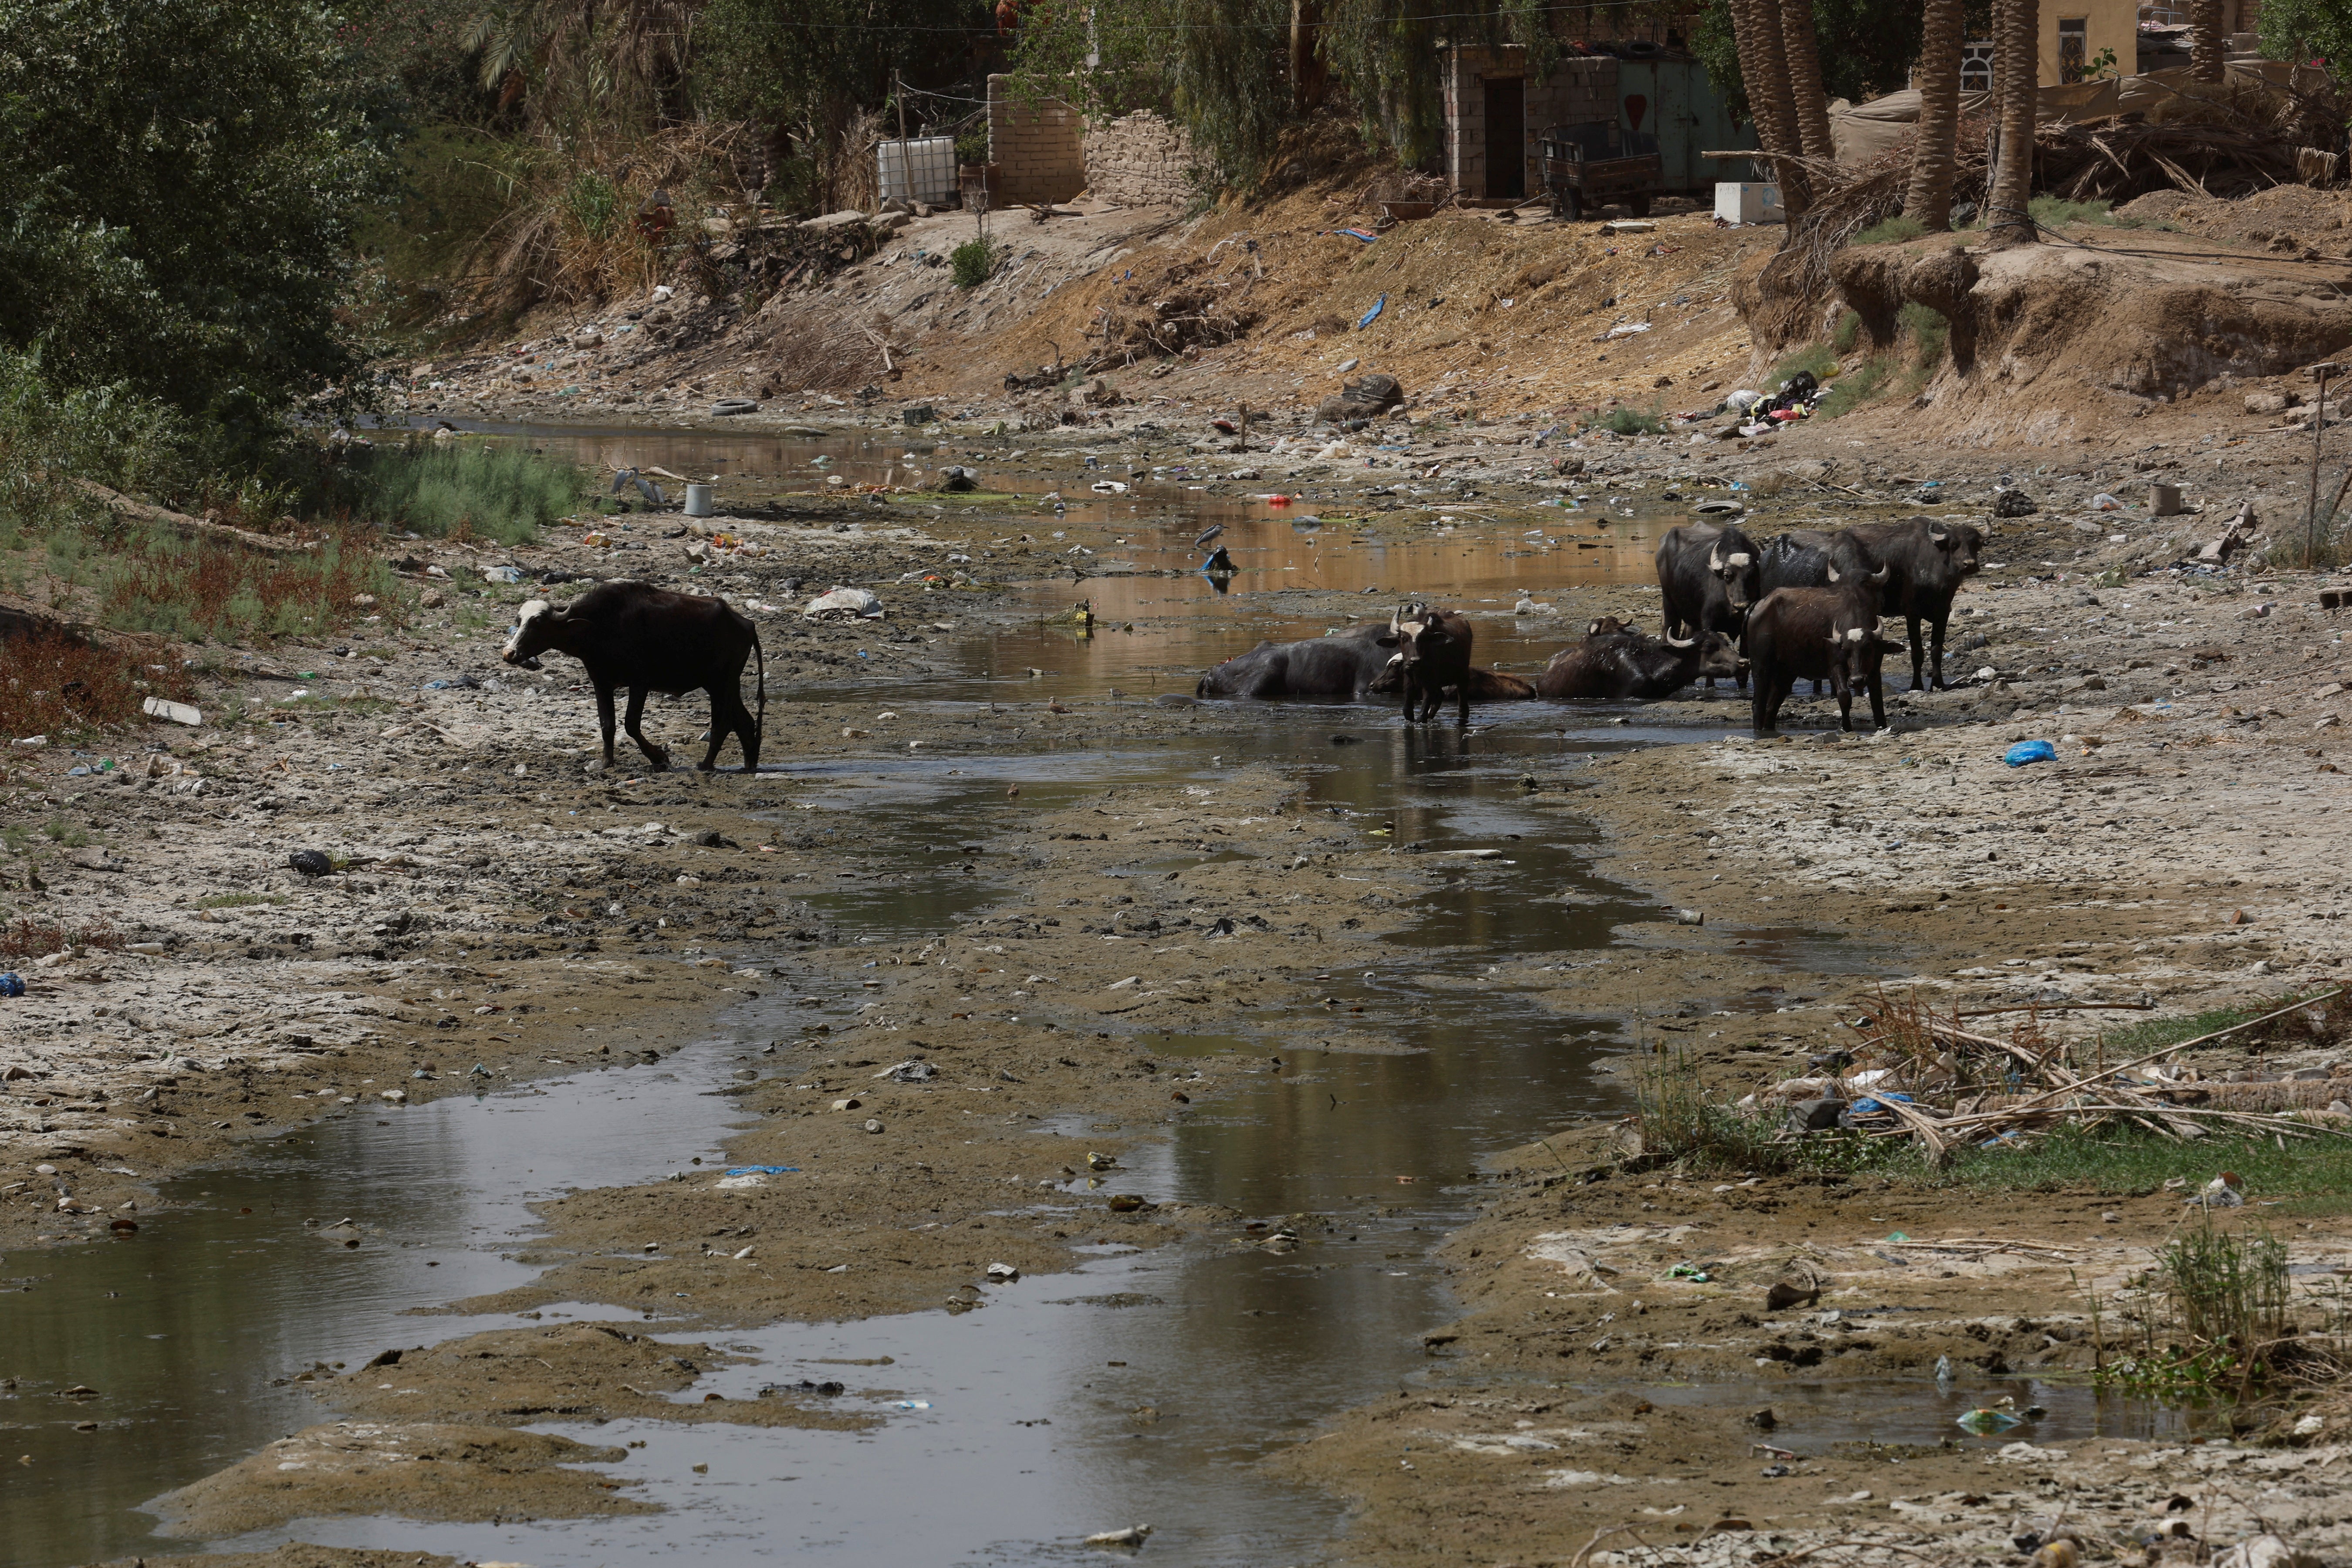 Buffalo walk across the dried riverbed